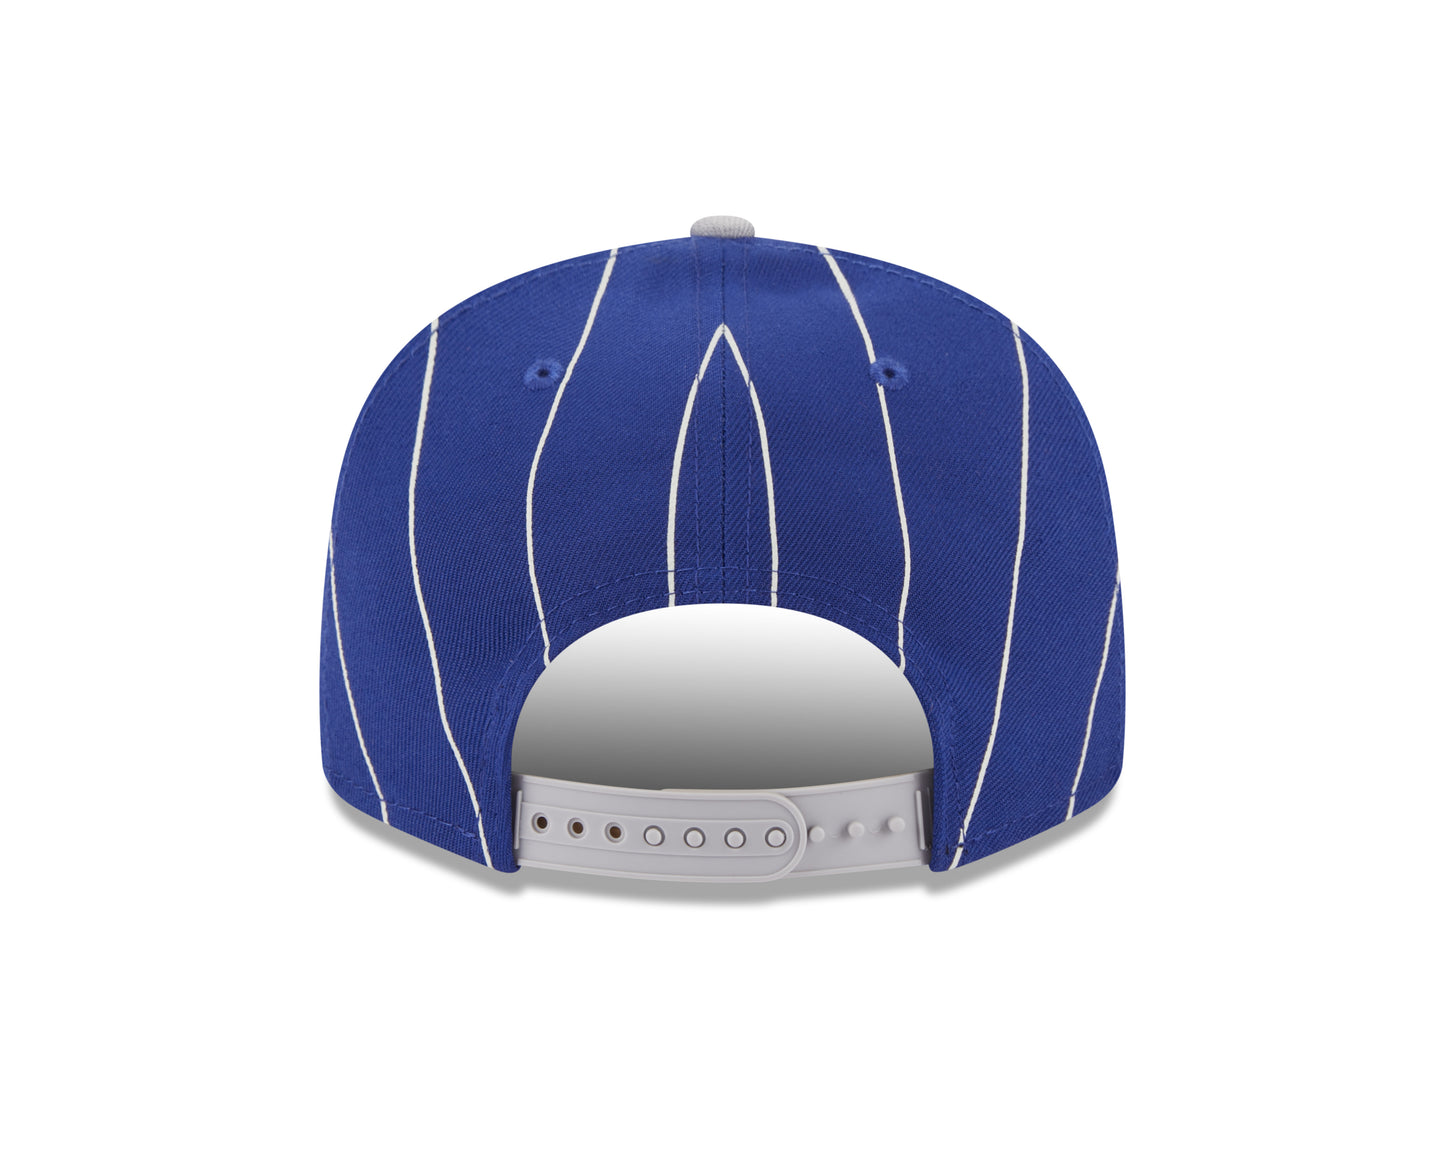 Los Angeles Dodgers Royal/Gray Vintage New Era 9FIFTY Snapback Hat